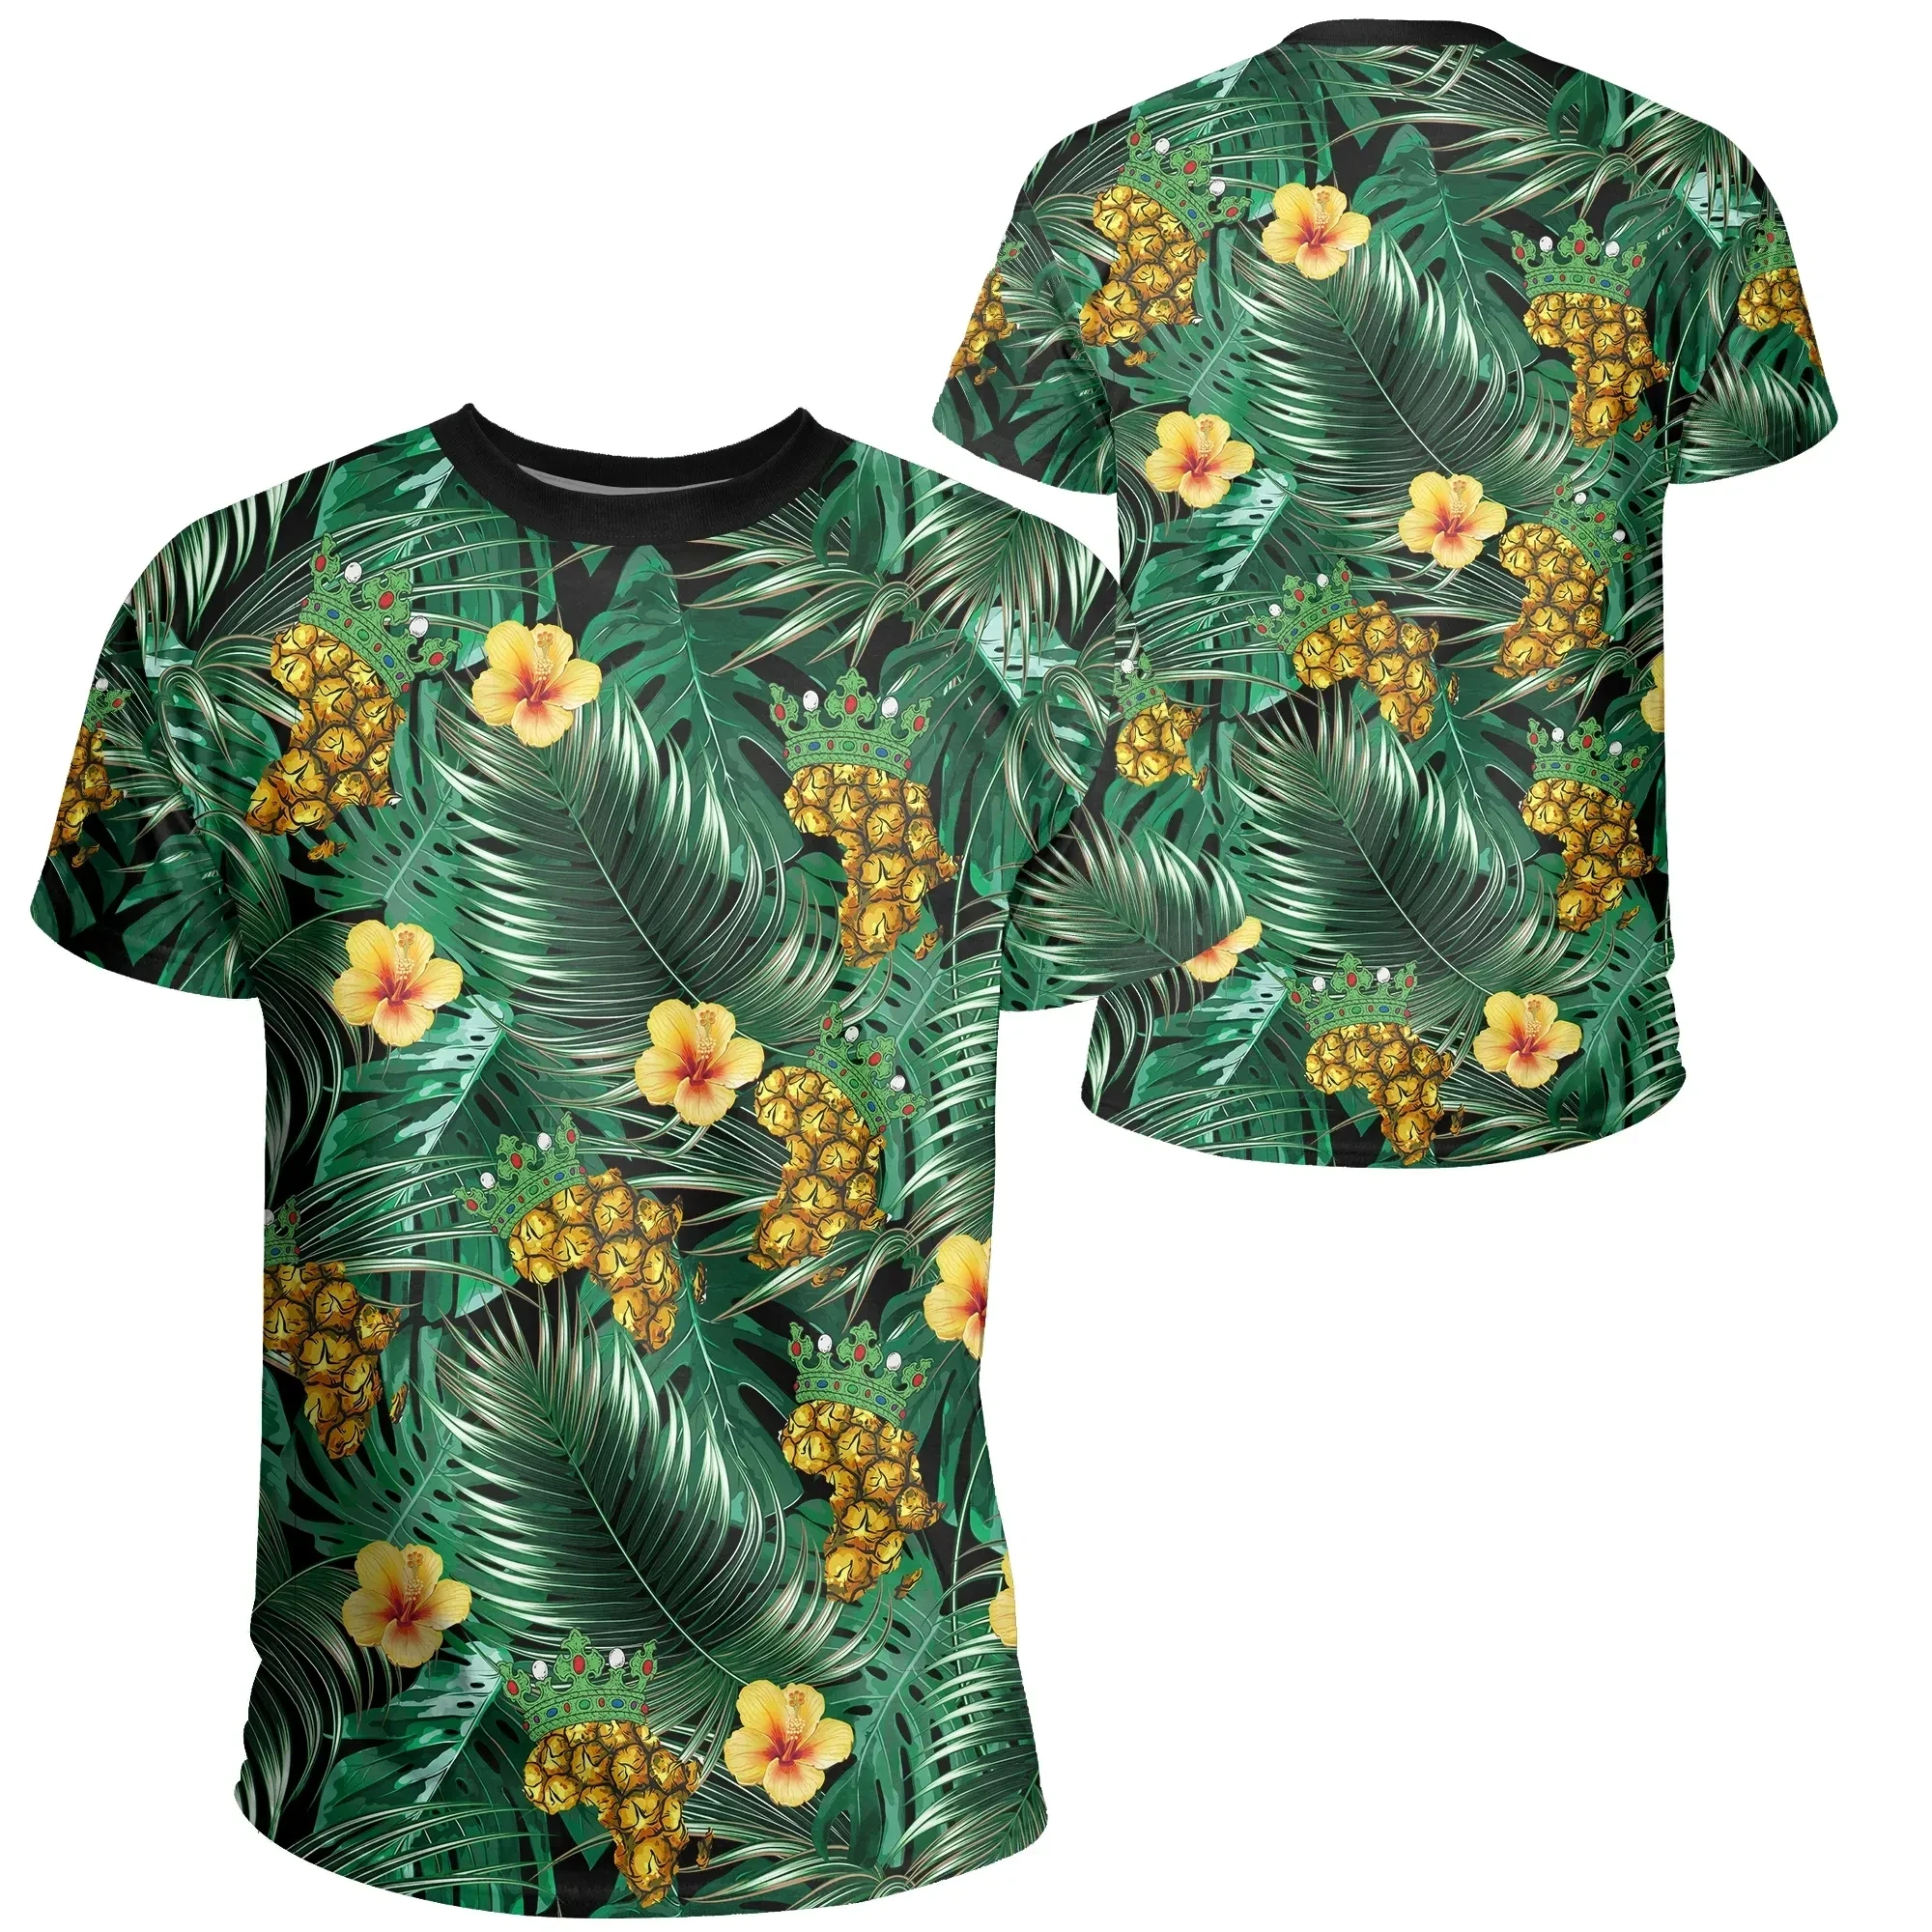 African T-shirt – Pine-Afrikapple King Summer Style Tee